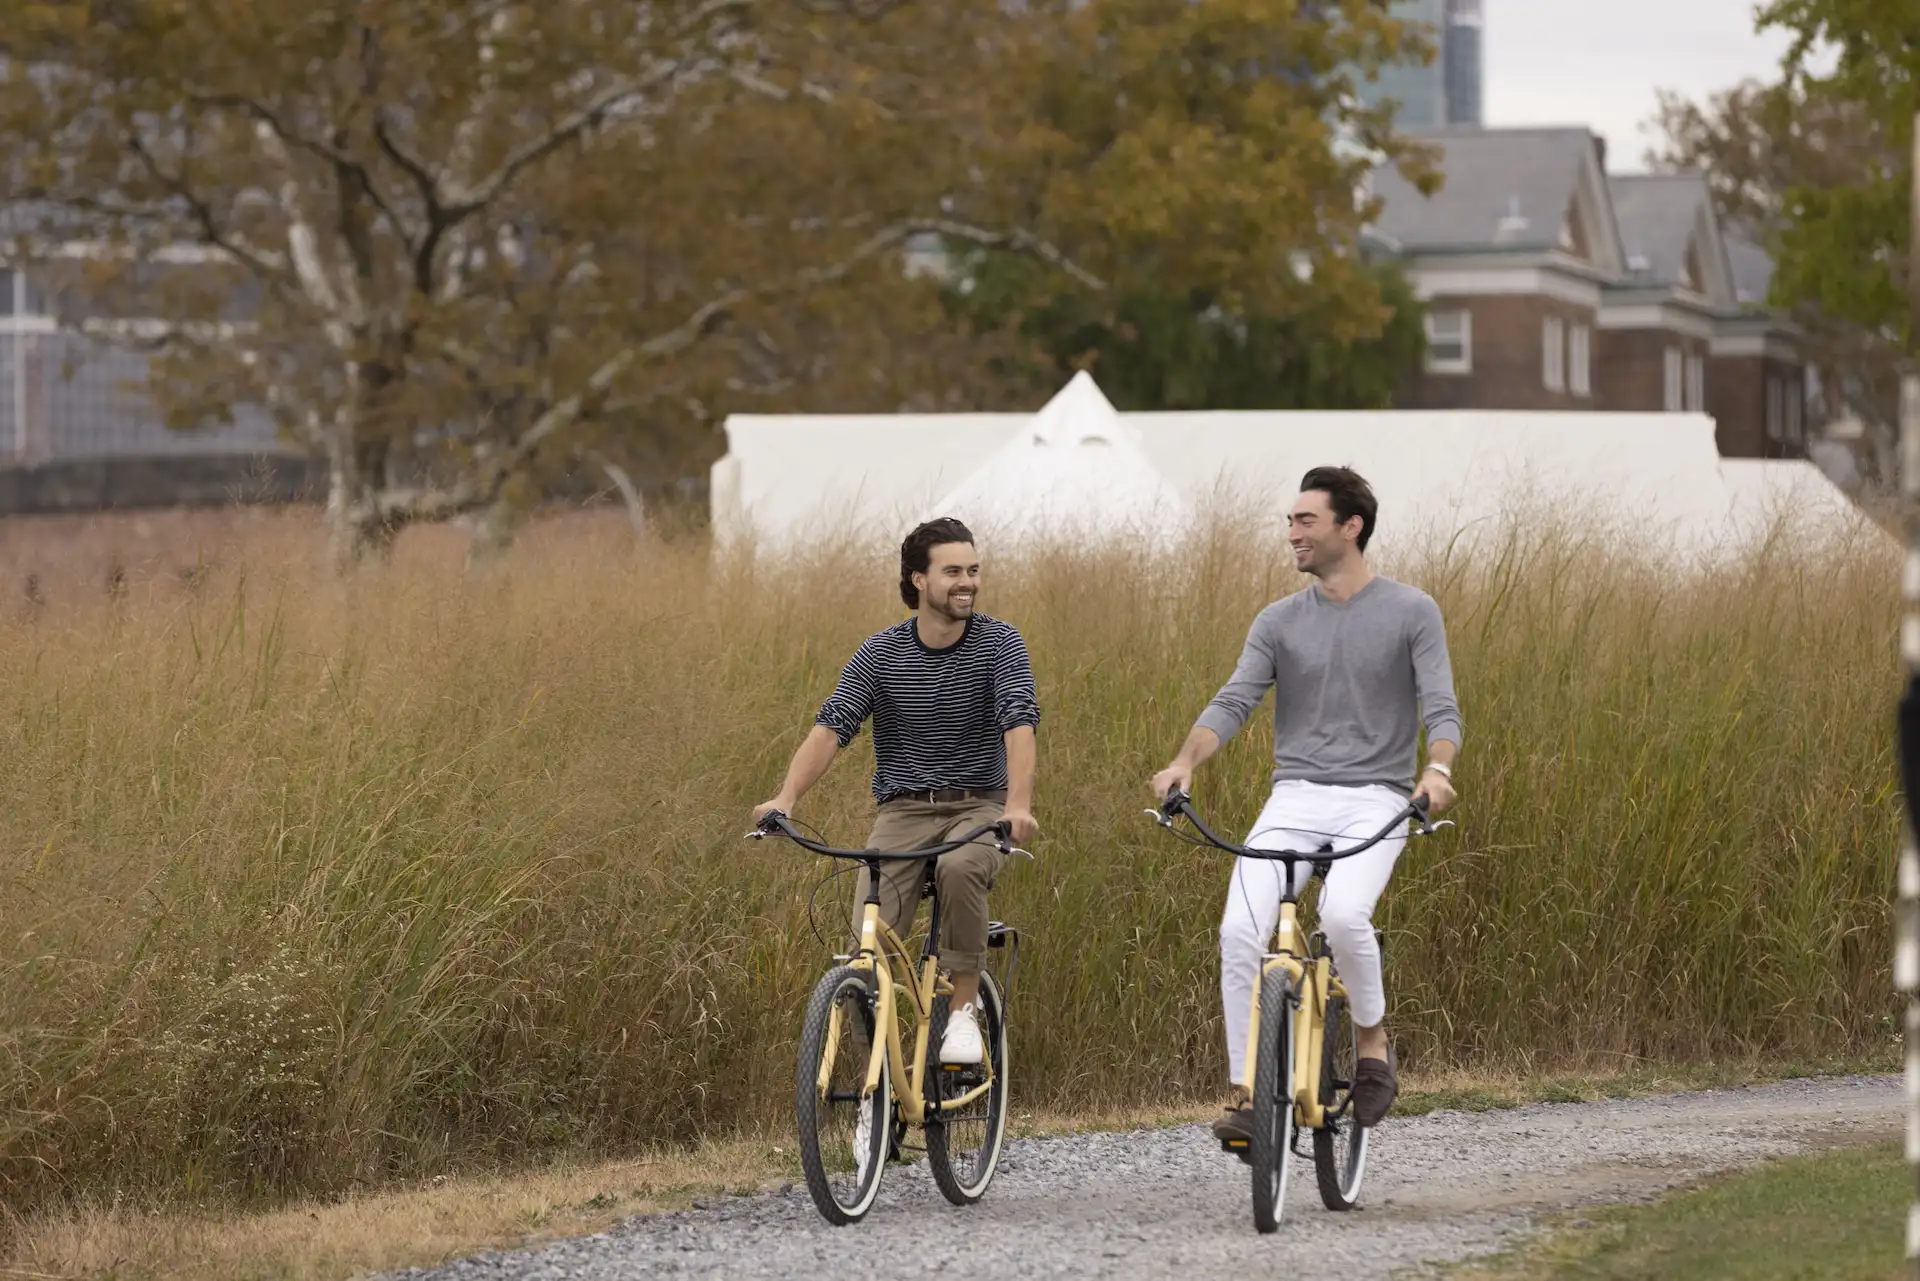 Men riding cycles